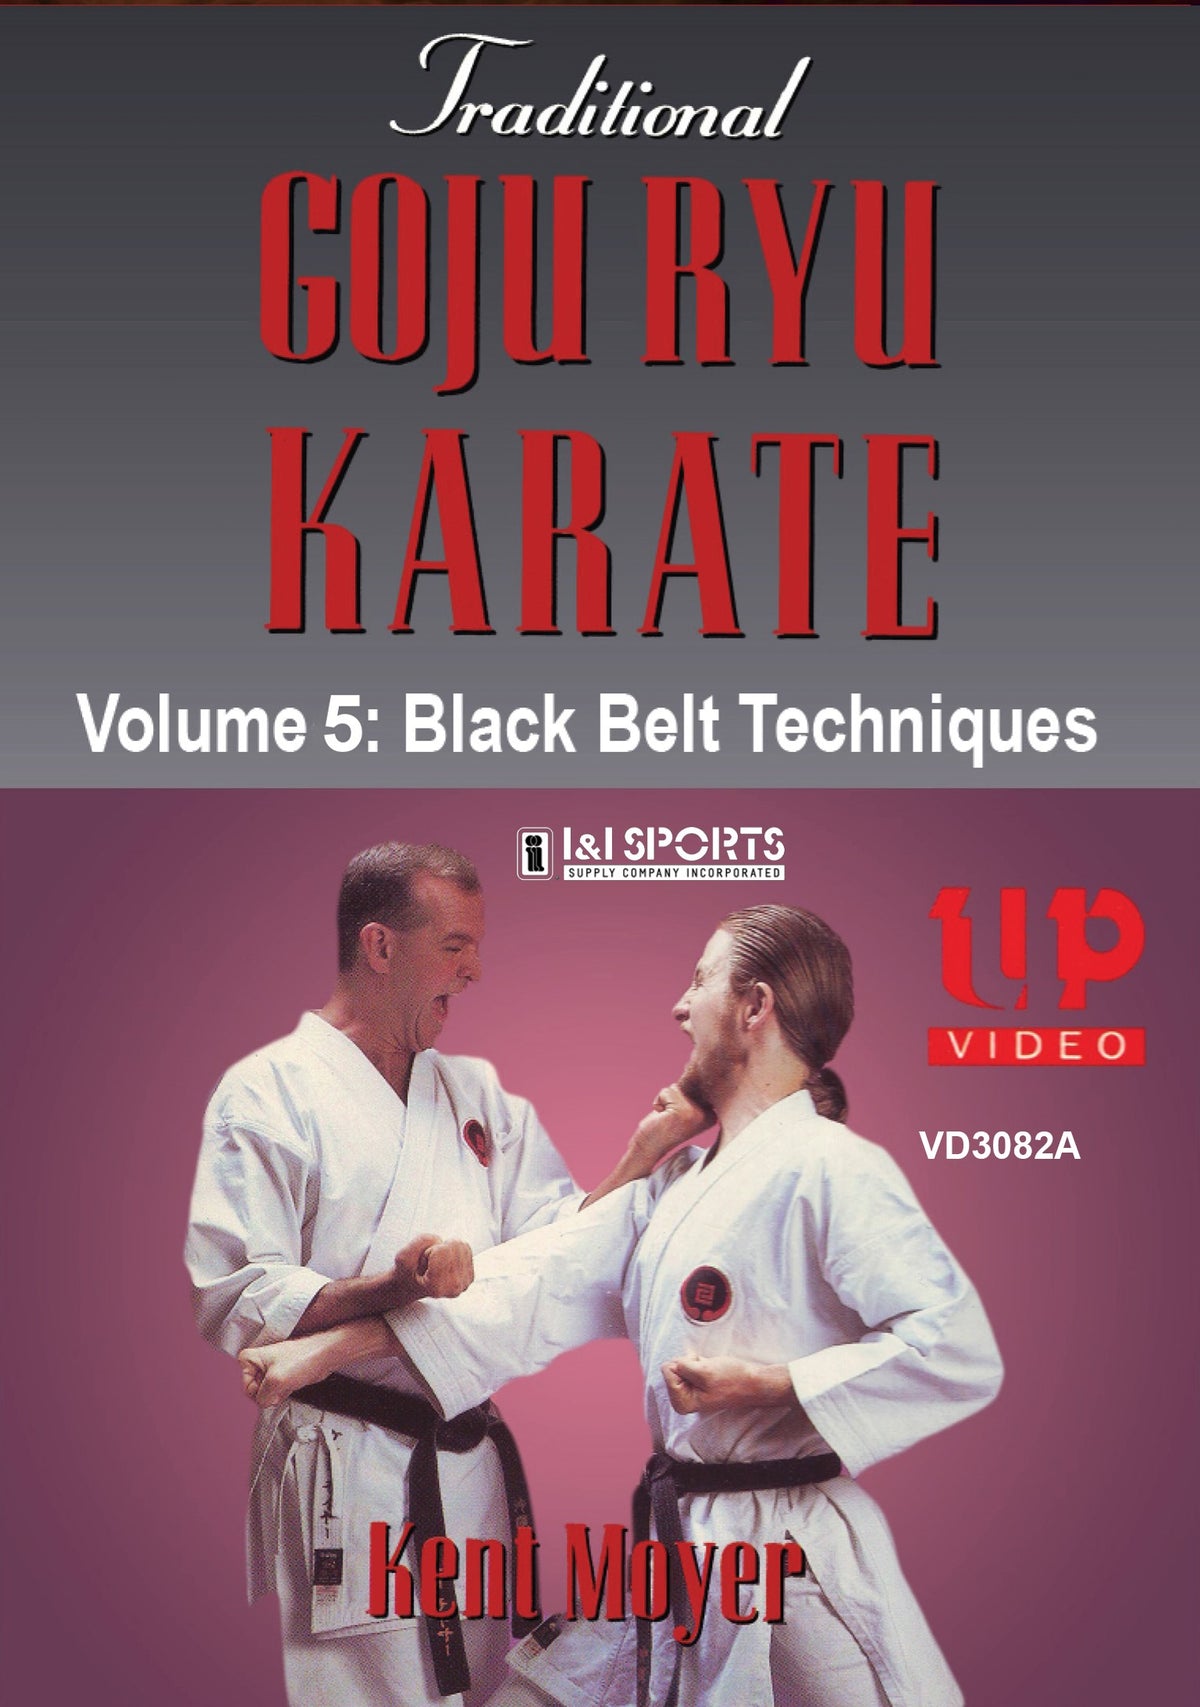 Traditional Goju Ryu Karate #5 Black Belt Kata Weapons Kumite DVD Kent Moyer